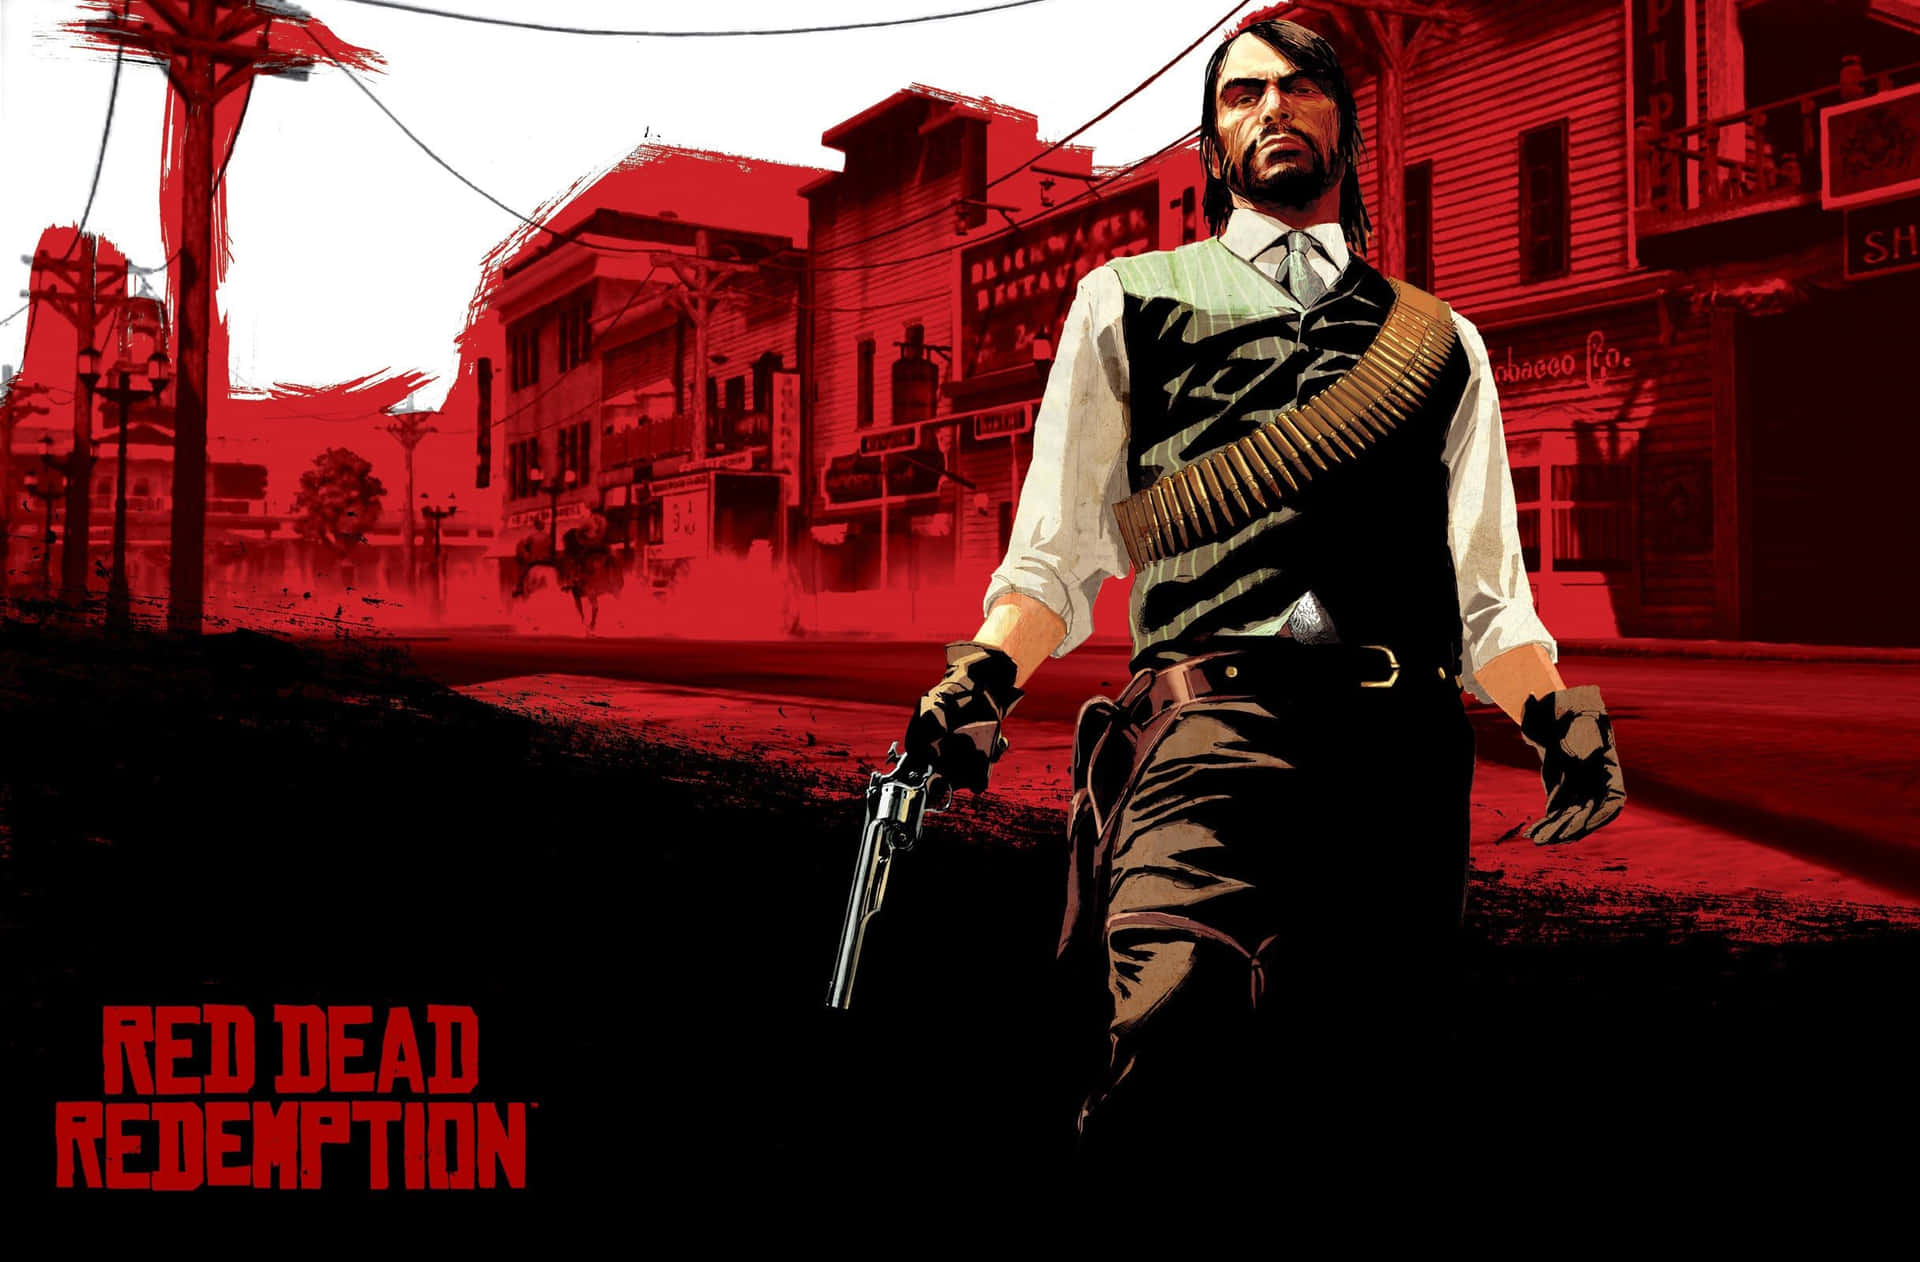 Explore Rockstar's Wild West with "Red Dead Redemption". Wallpaper